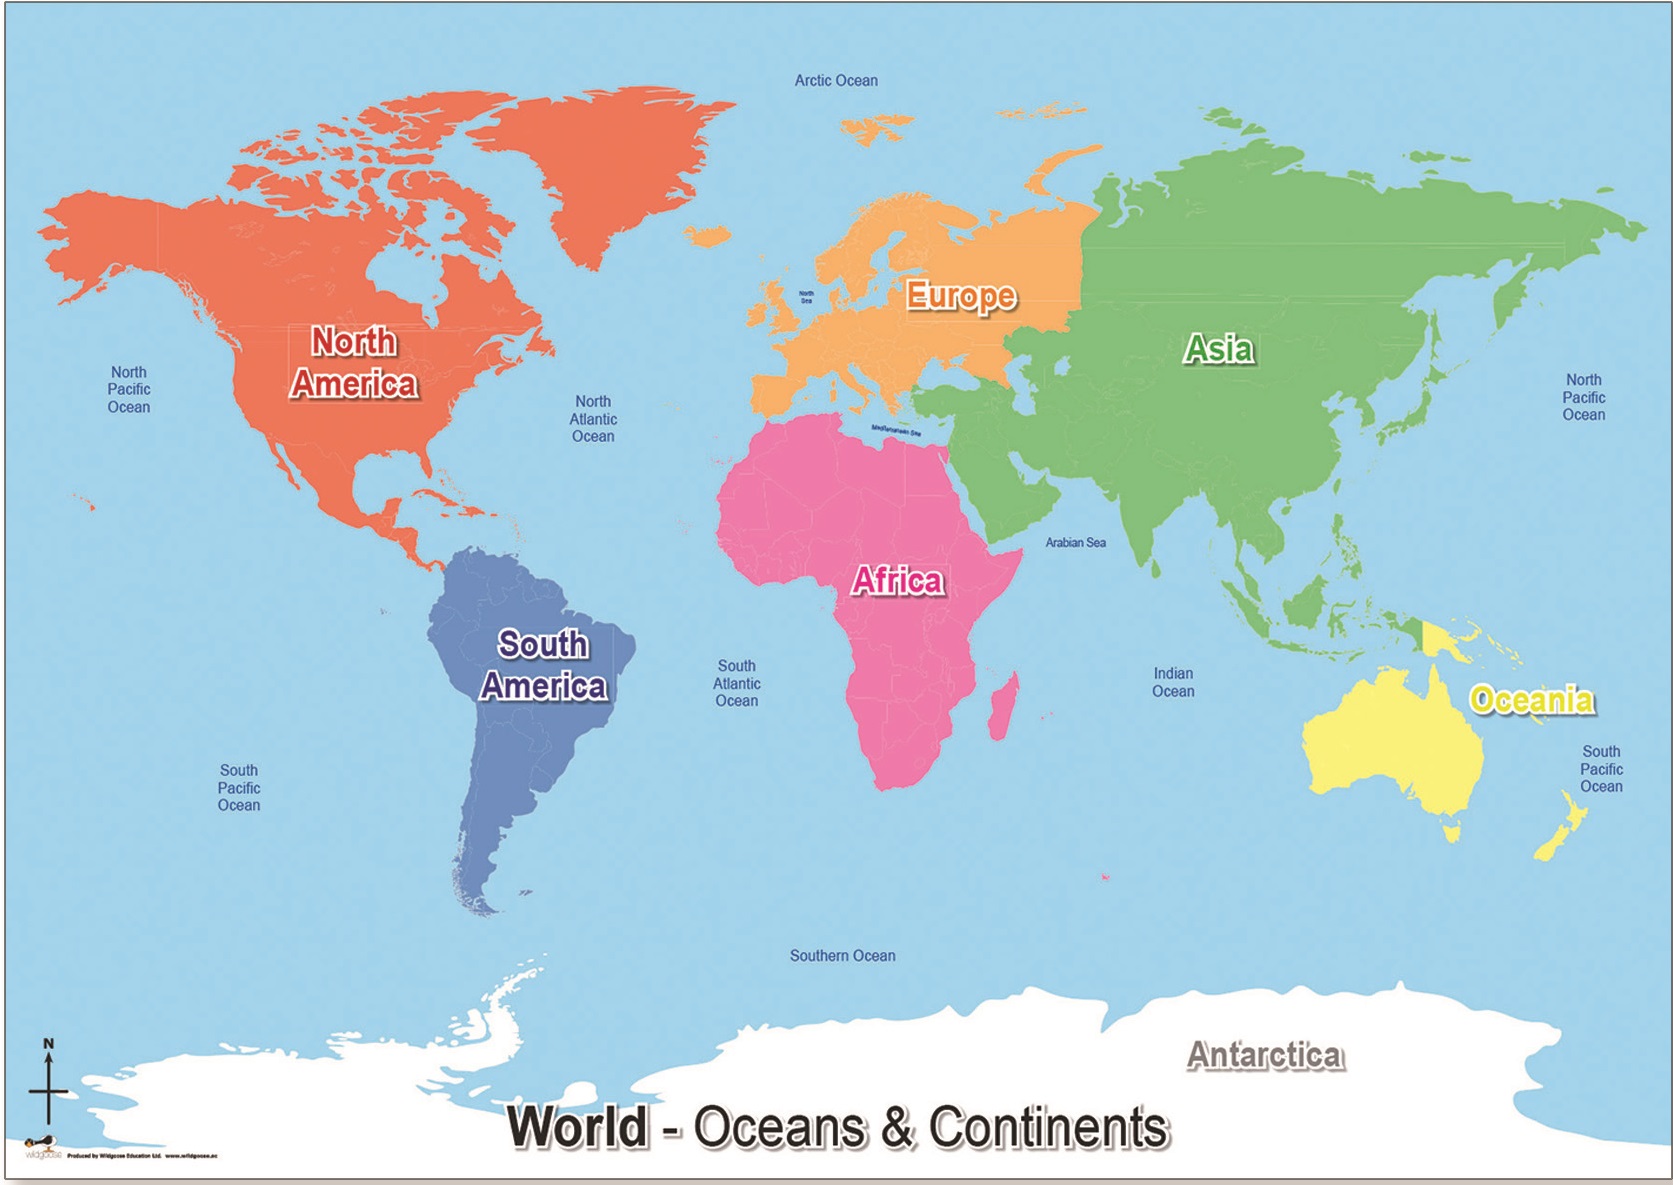 map of 7 seas